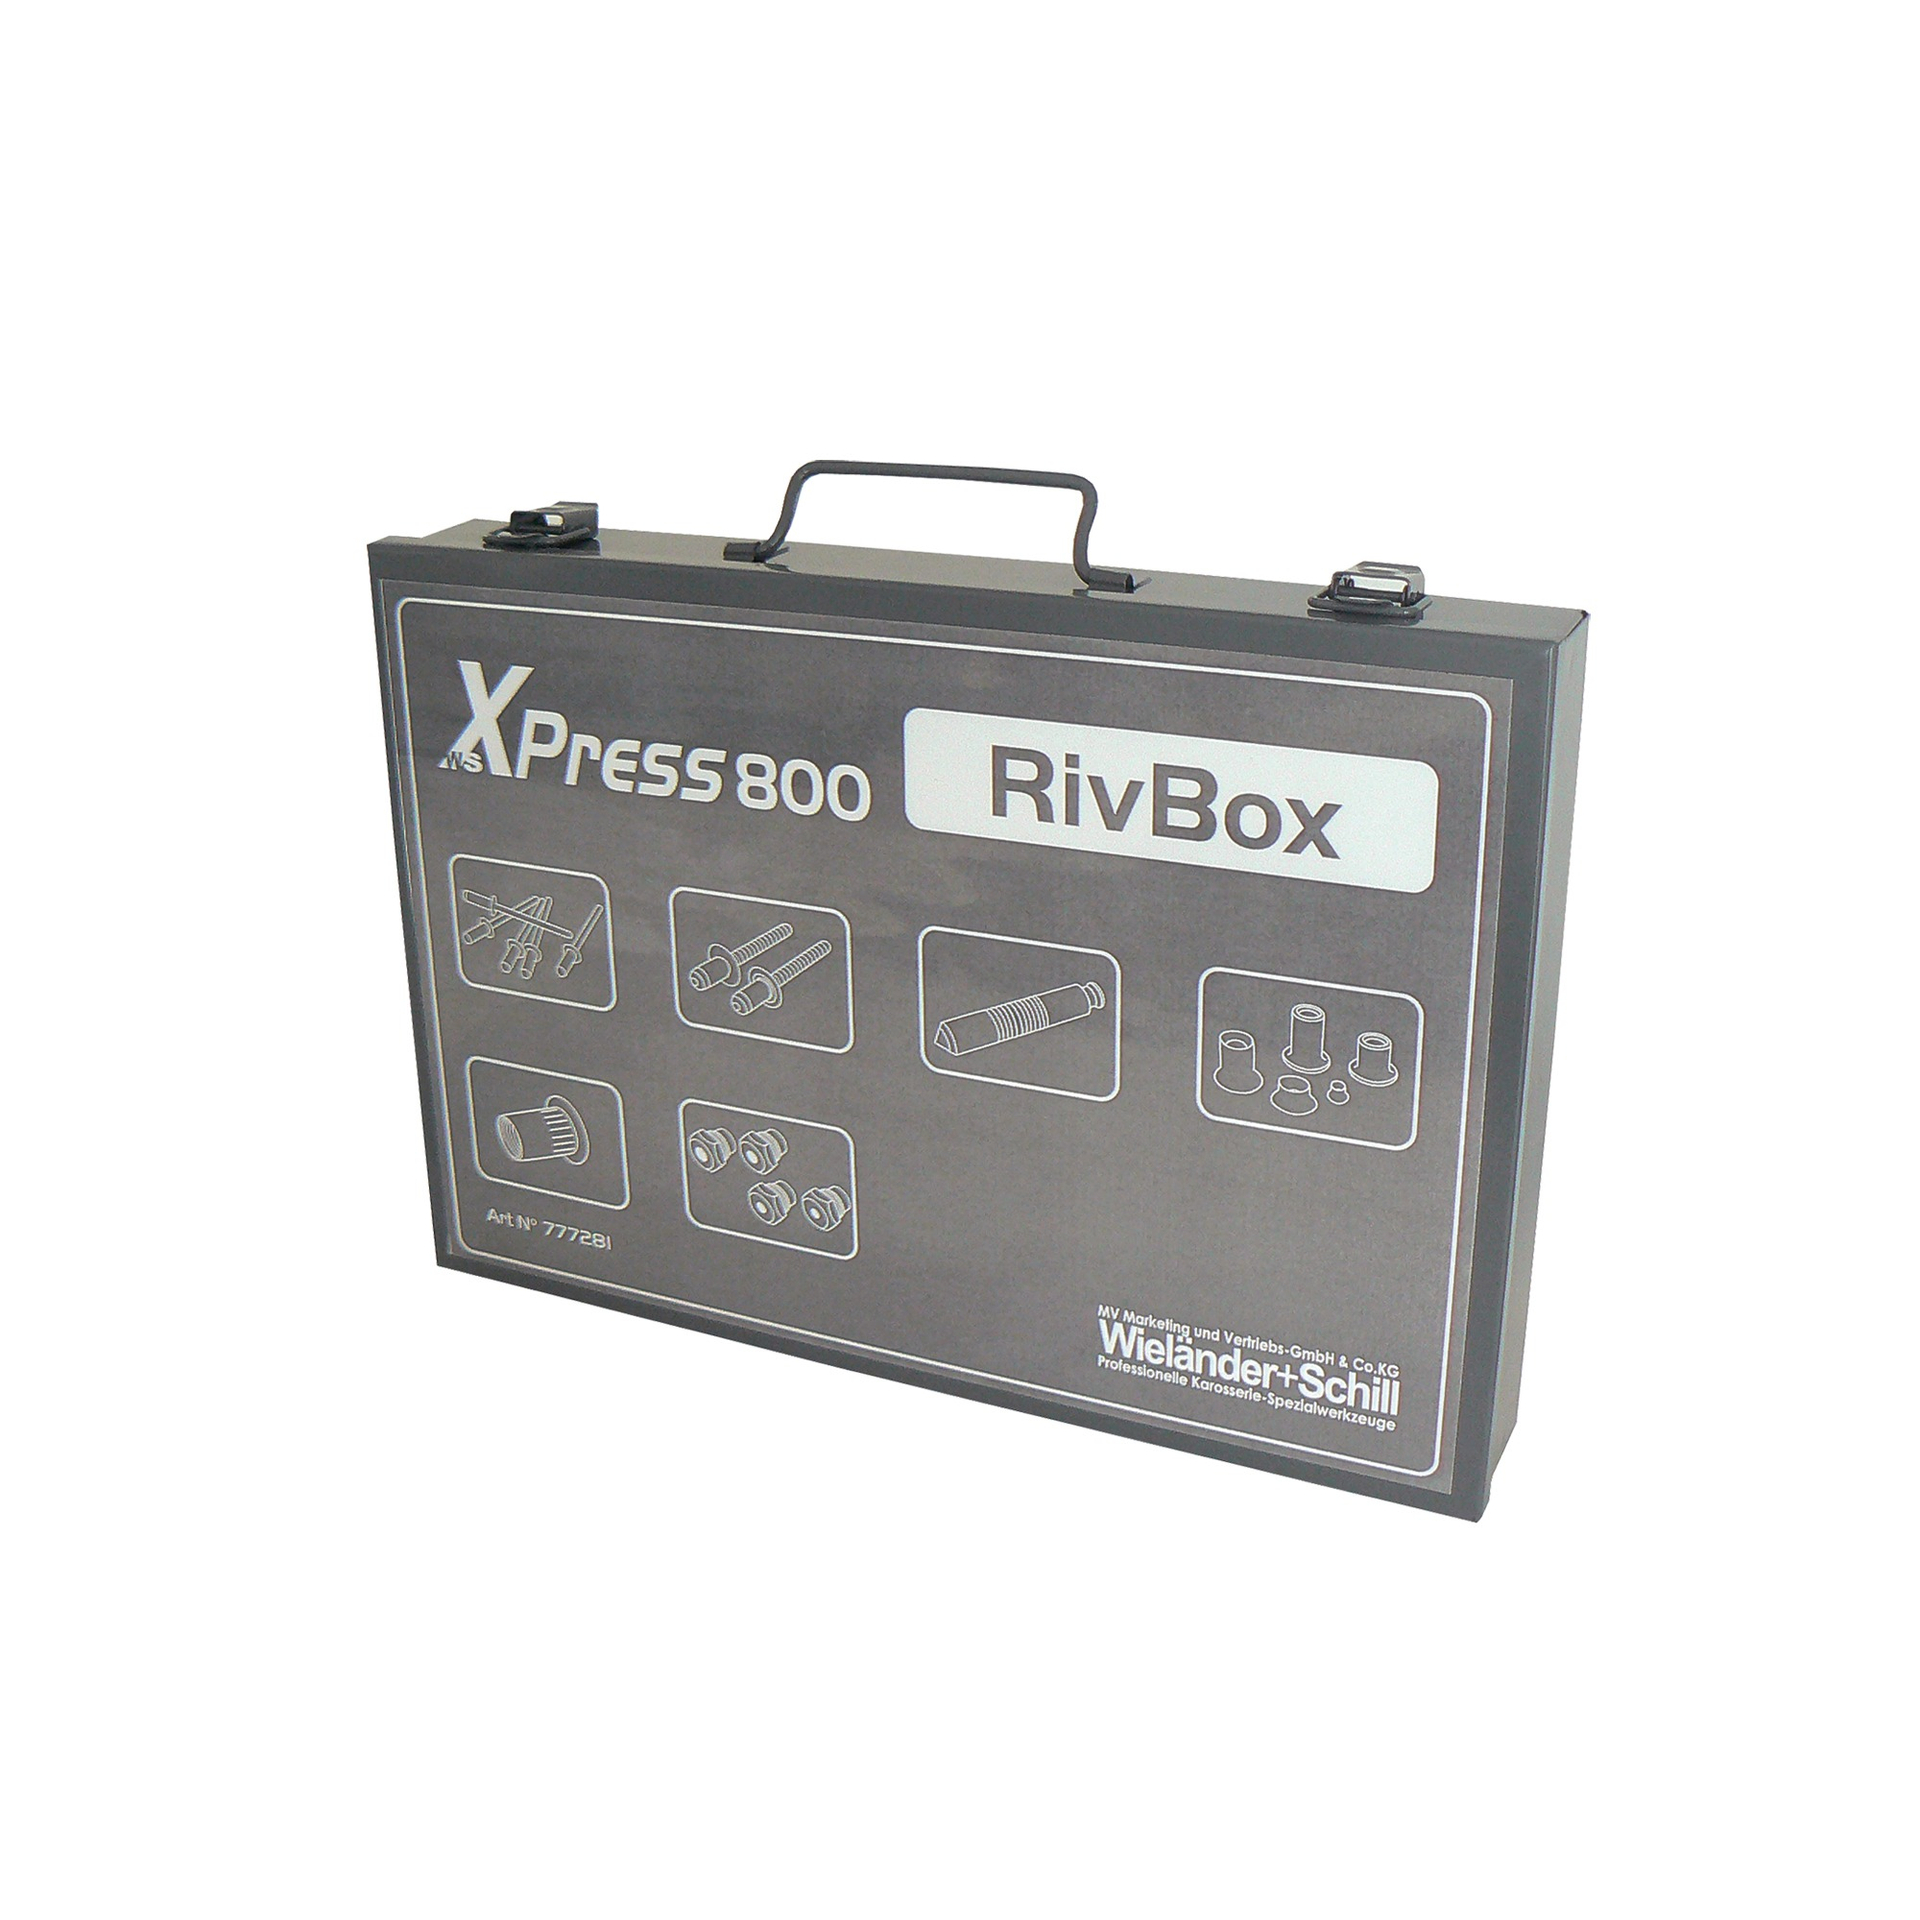 Комплект заклепок для XPress 800 RivBox N1, Wieländer+Schill - Германия купить